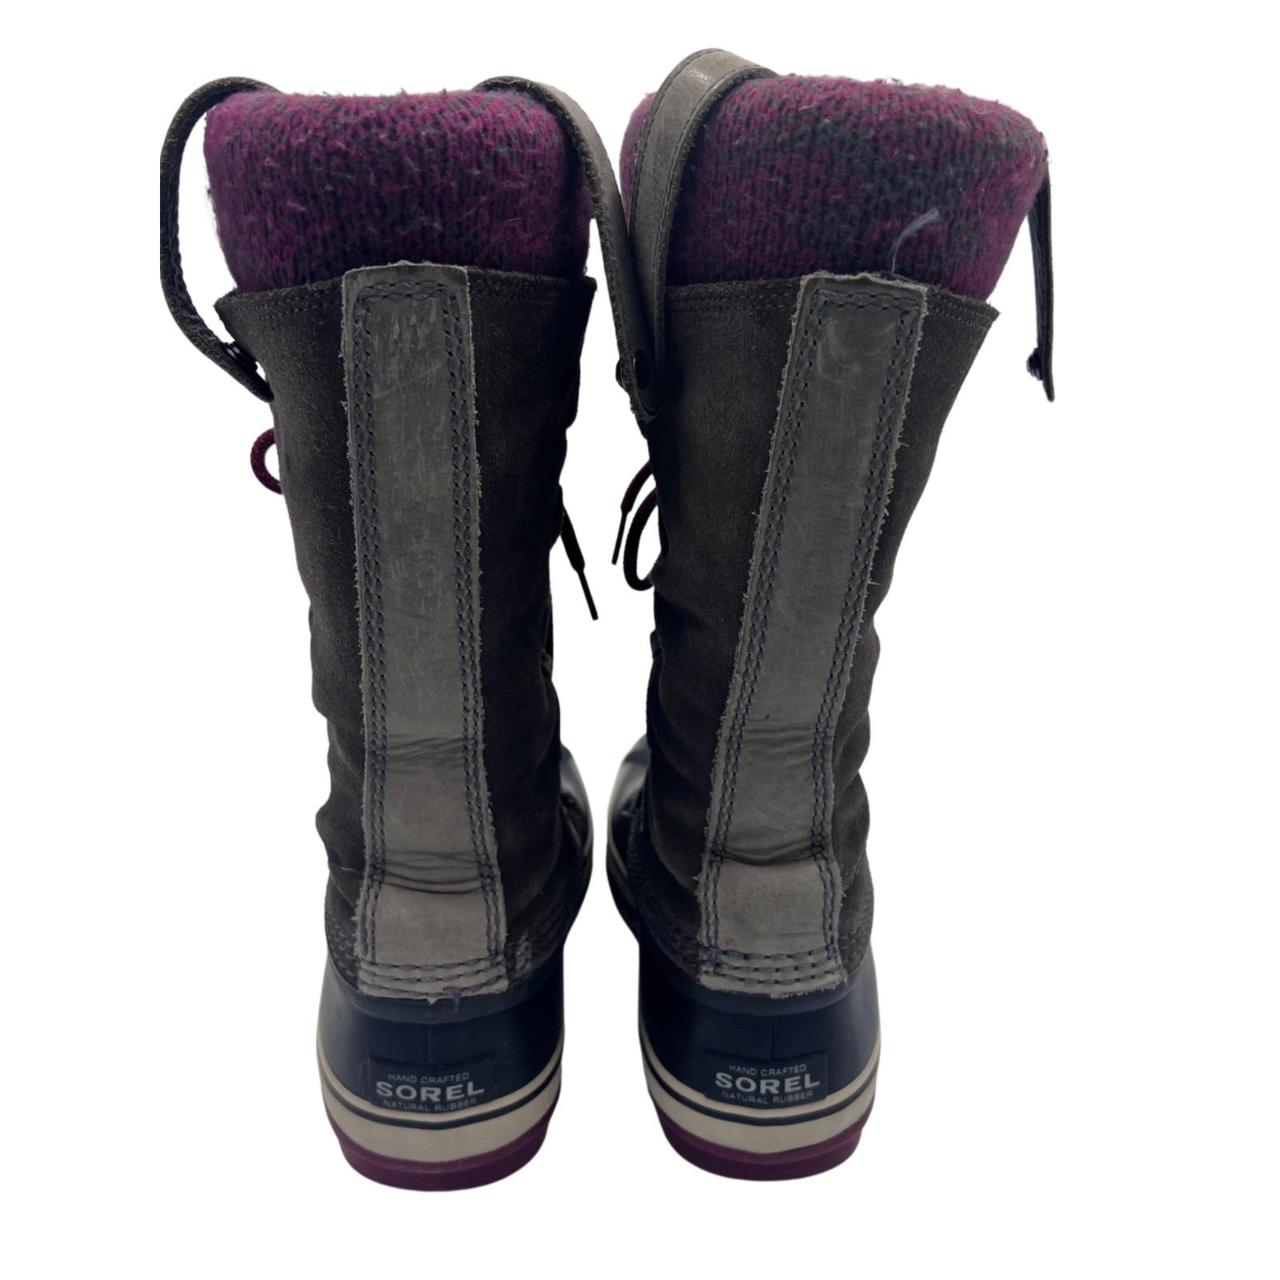 Sorel Women's Grey and Purple Boots (2)